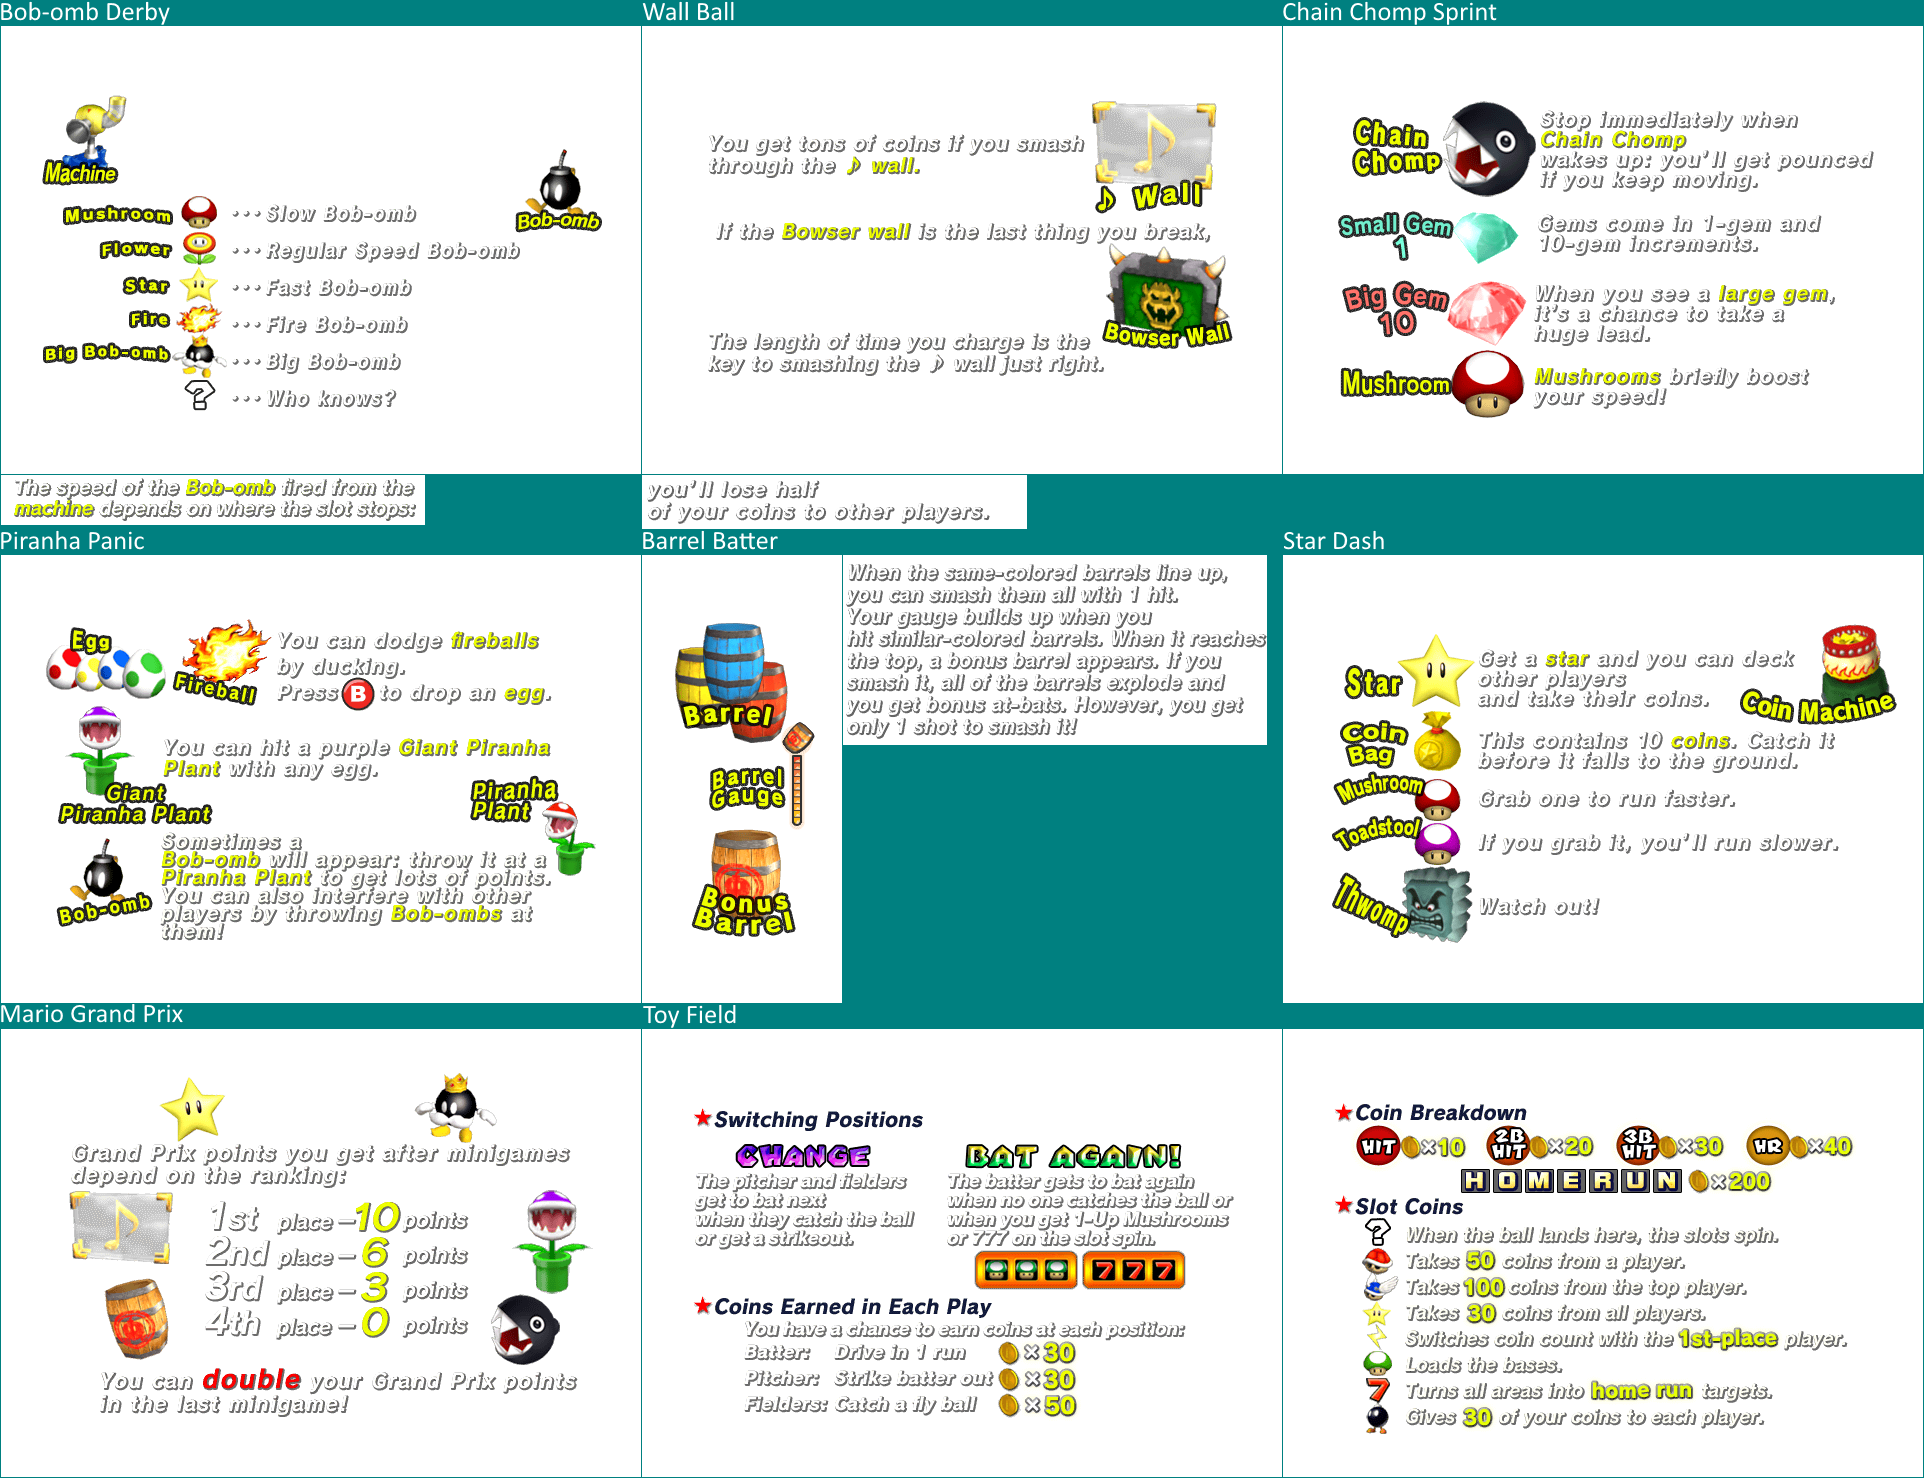 Mario Superstar Baseball - Minigame & Toy Field Rules (English)